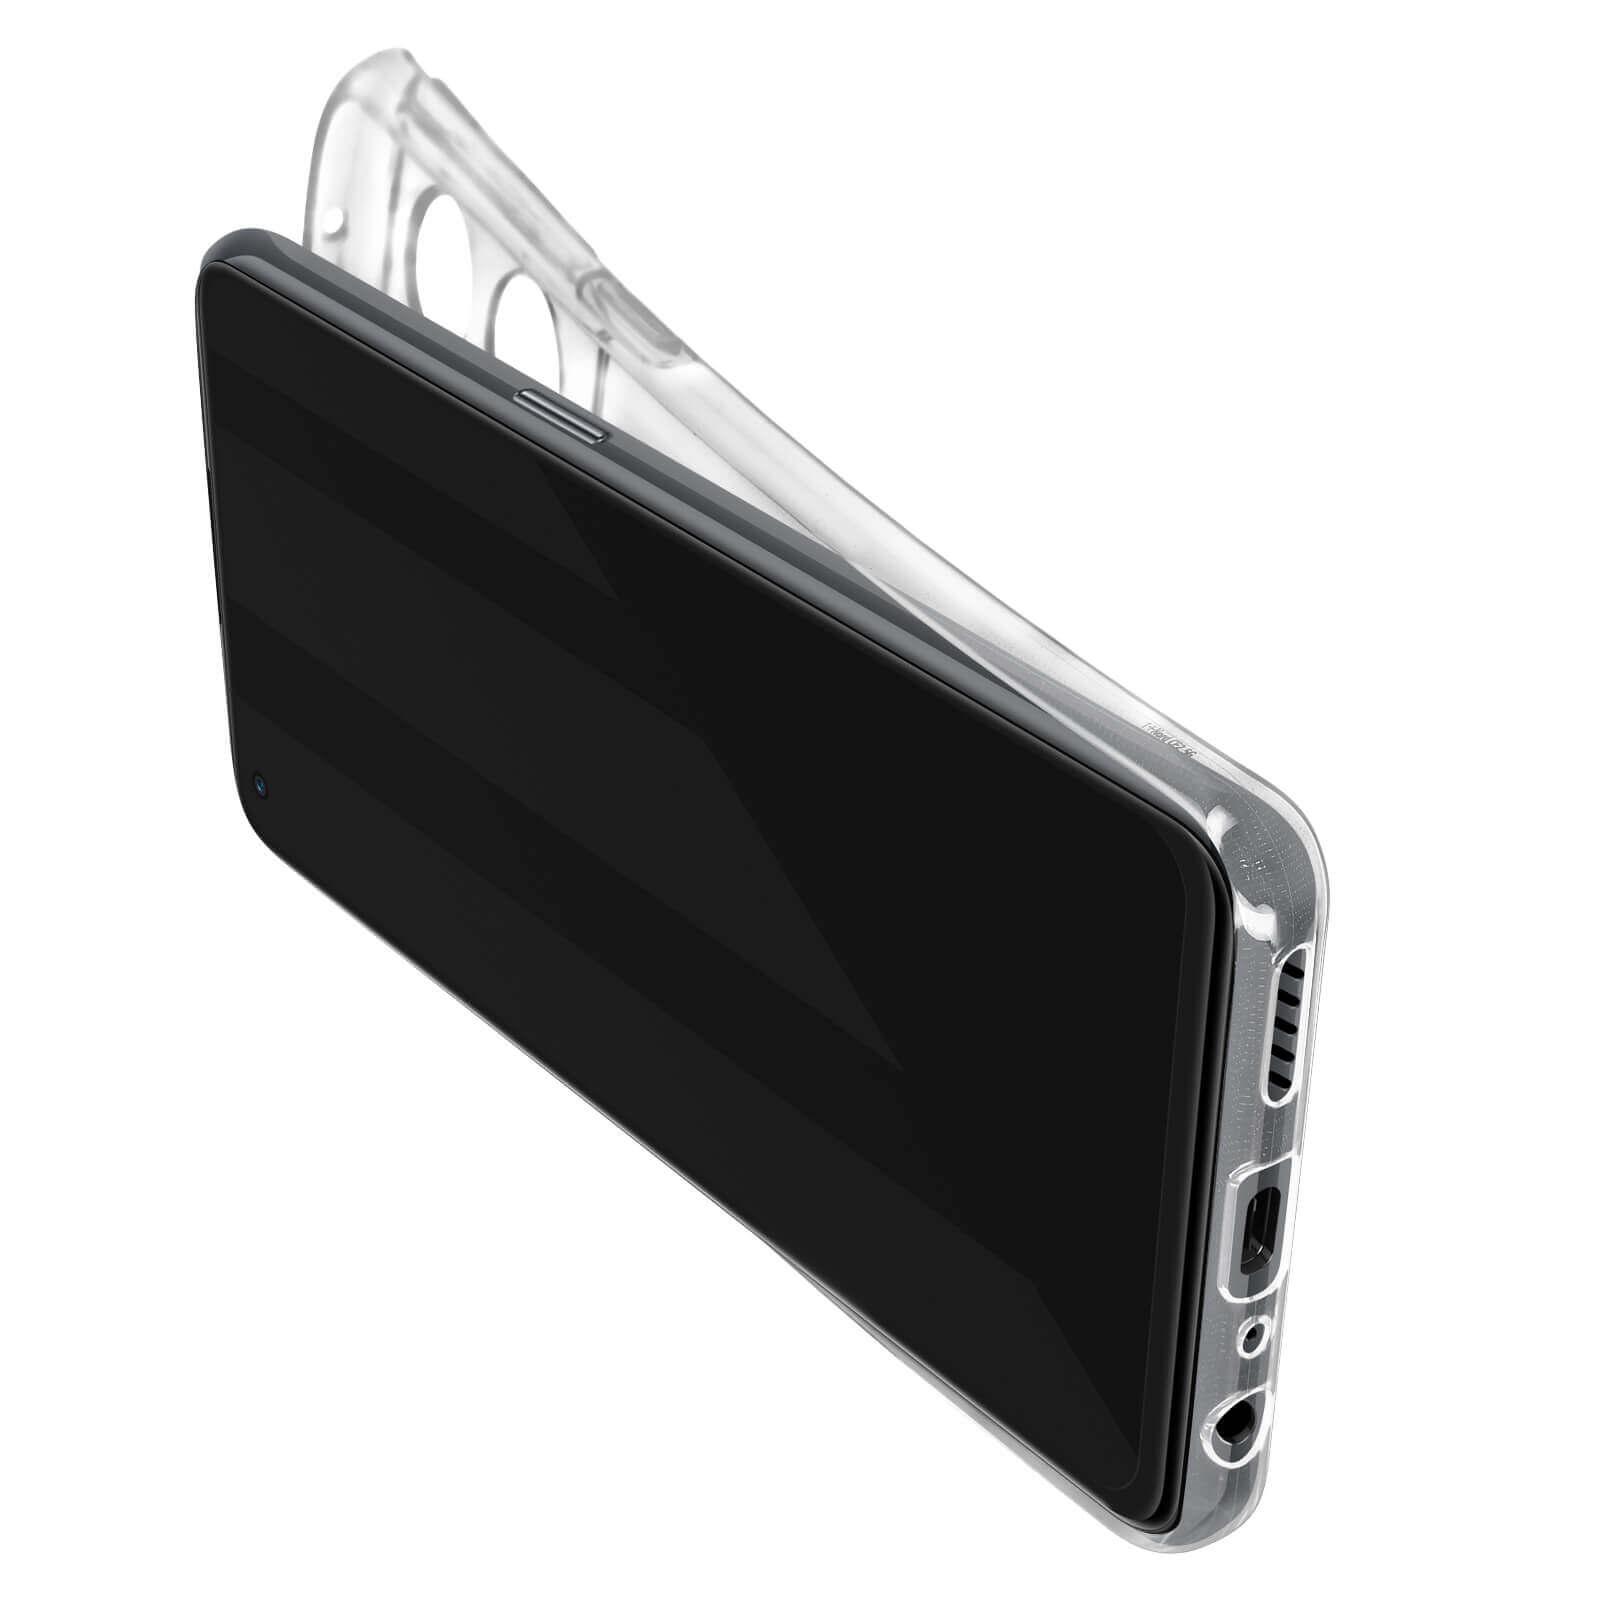 CE Set 5G, OnePlus, AVIZAR Schwarz Series, 2 Nord Backcover,